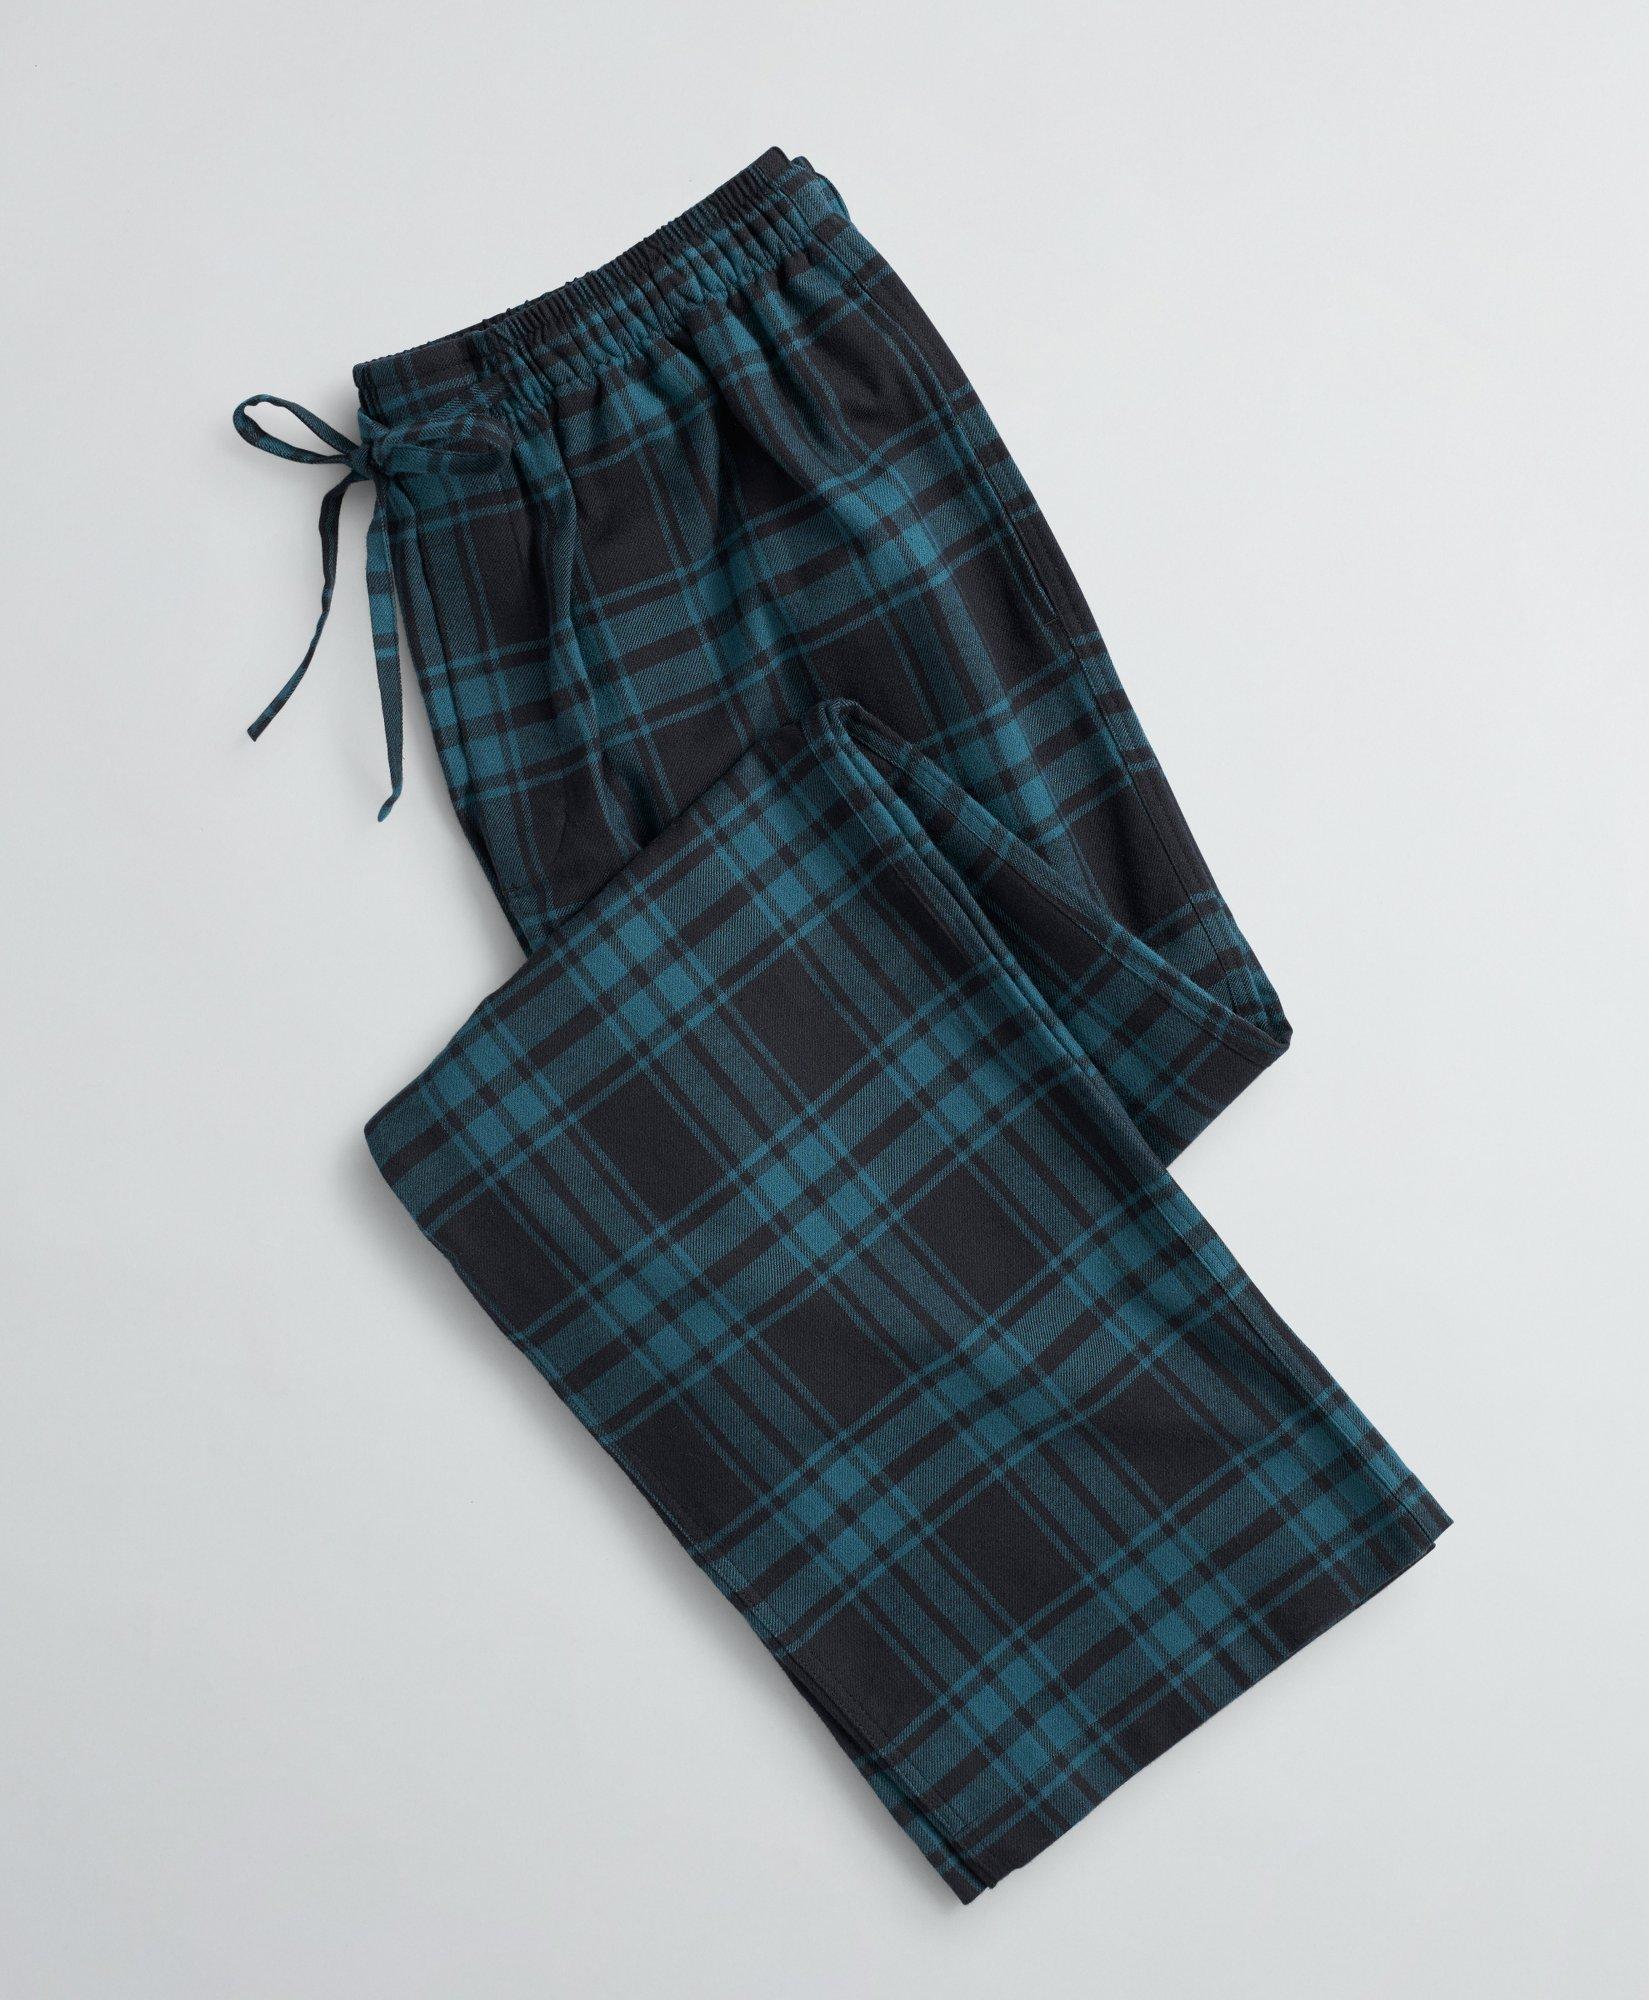 Yuiboo Blue Black Tartan Plaid Scottish Mens Cotton Pajama Bottoms